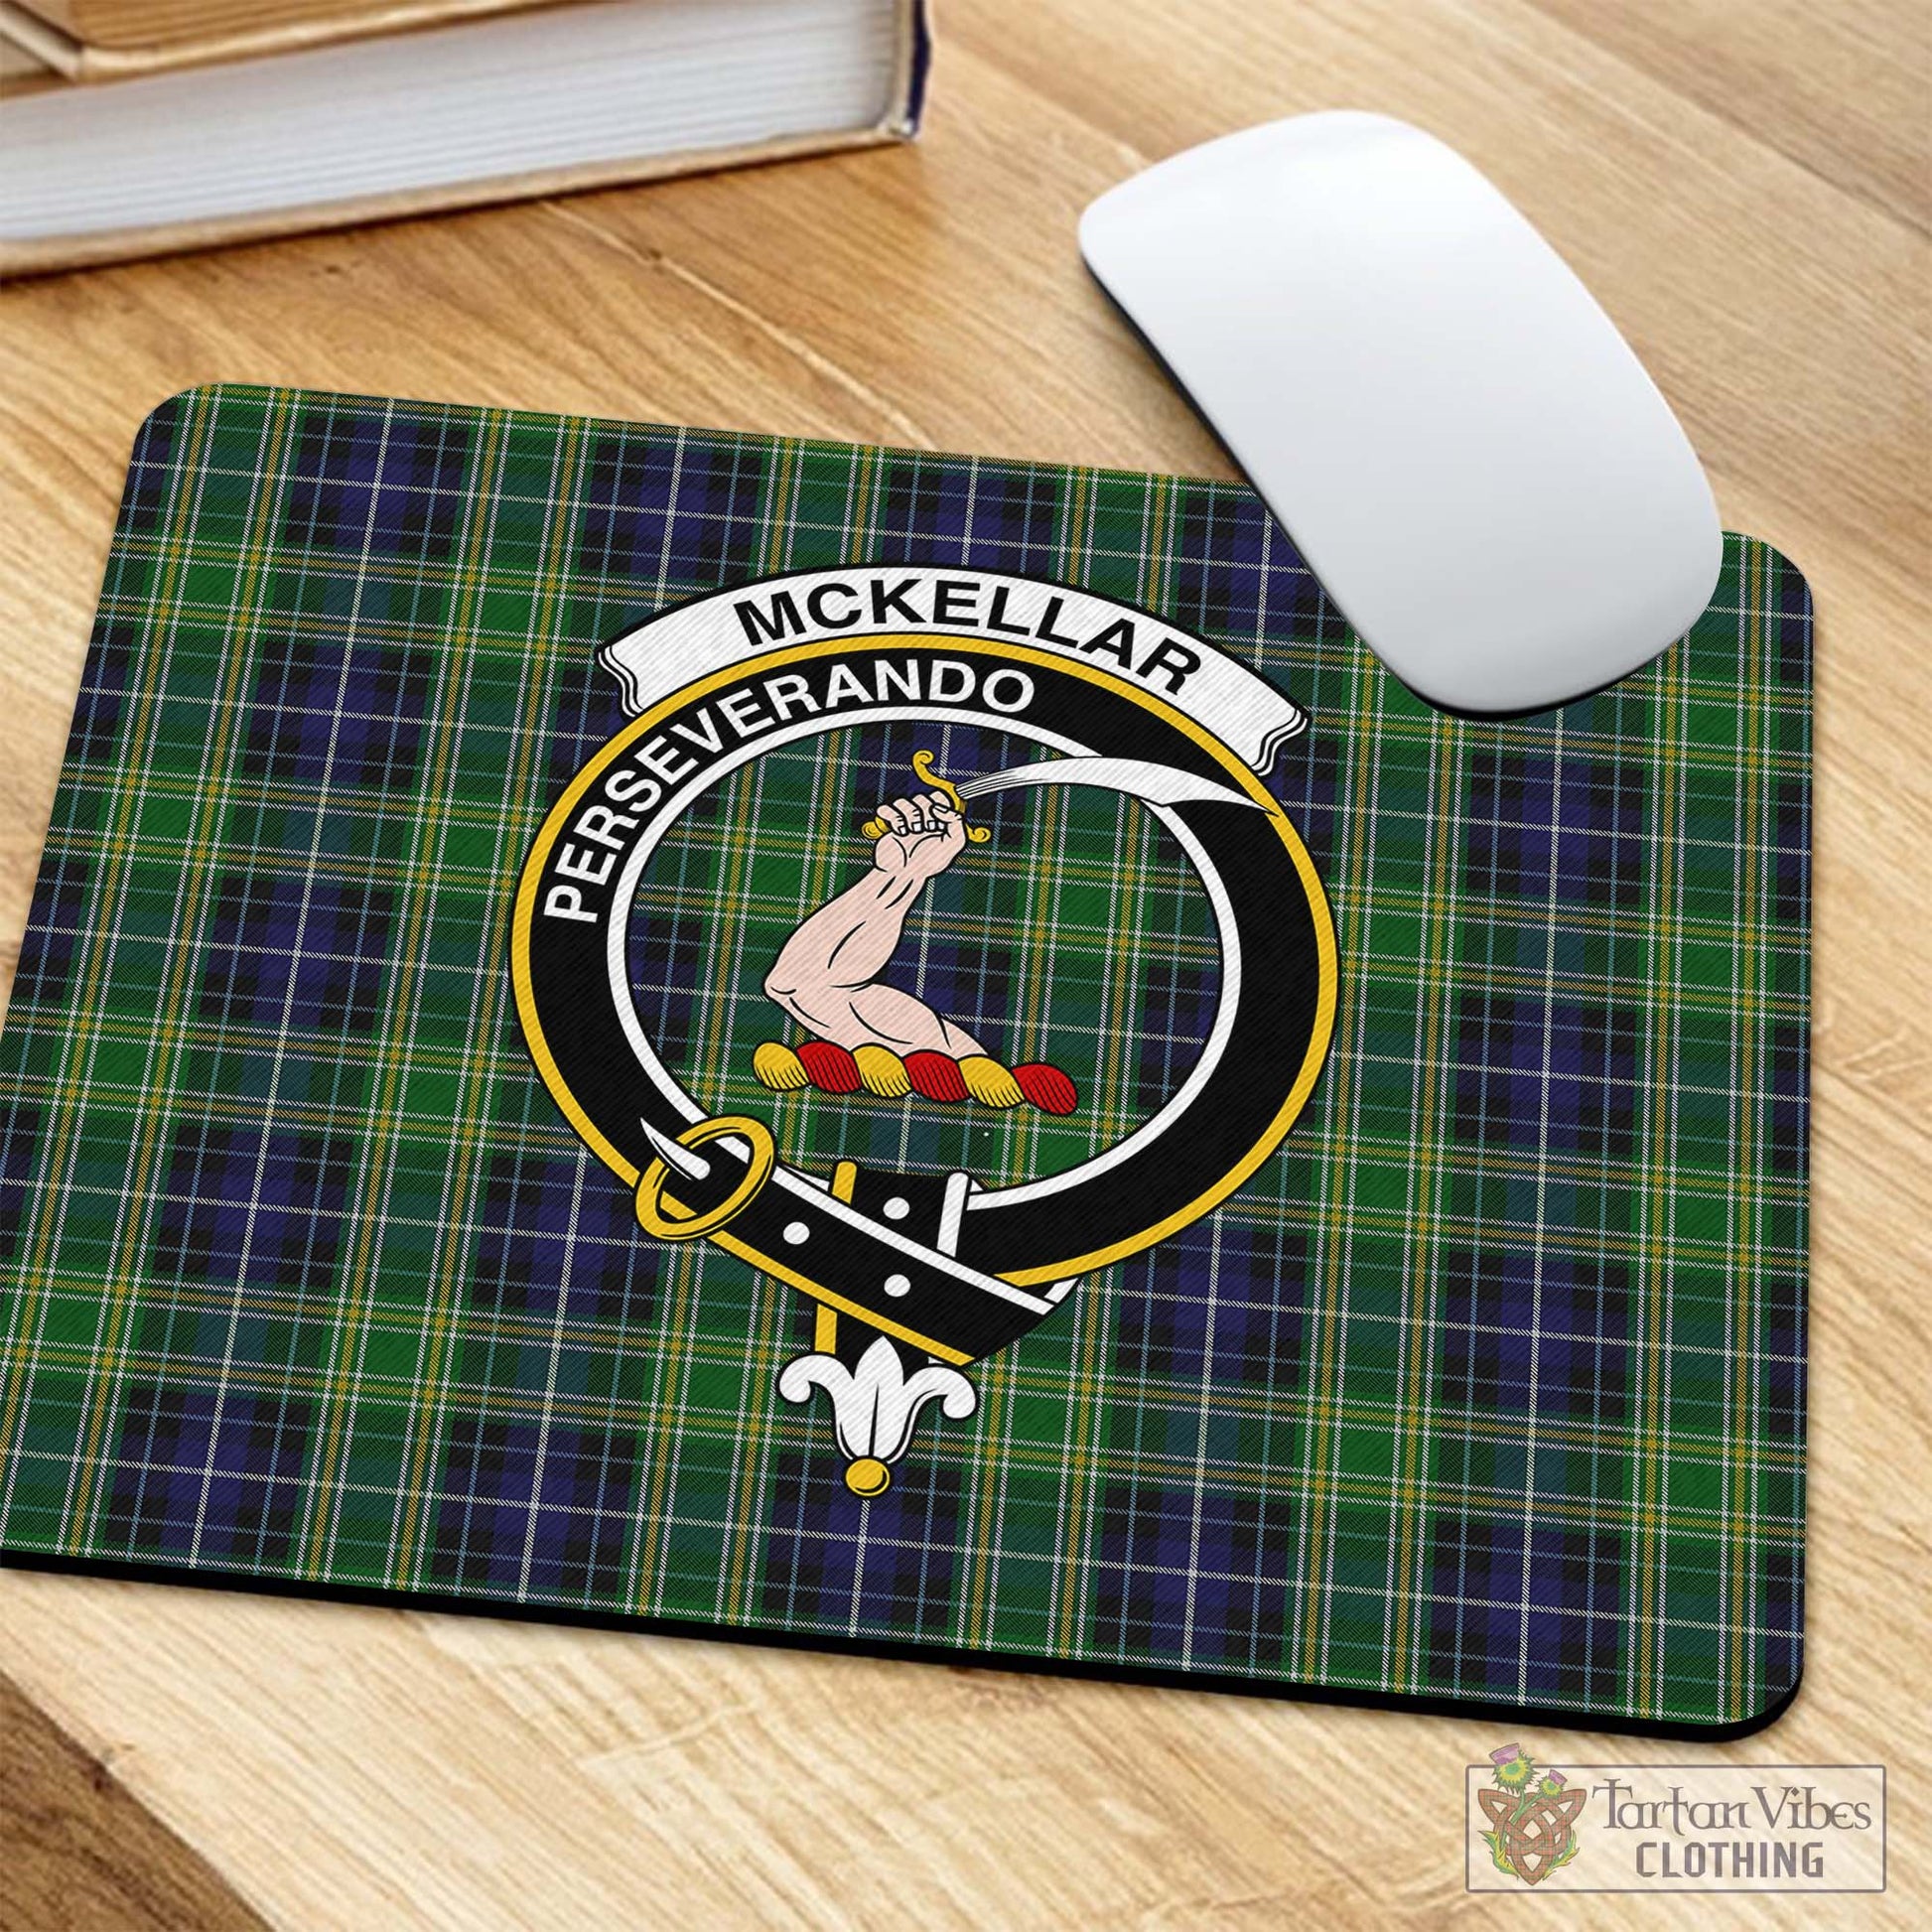 Tartan Vibes Clothing McKellar Tartan Mouse Pad with Family Crest